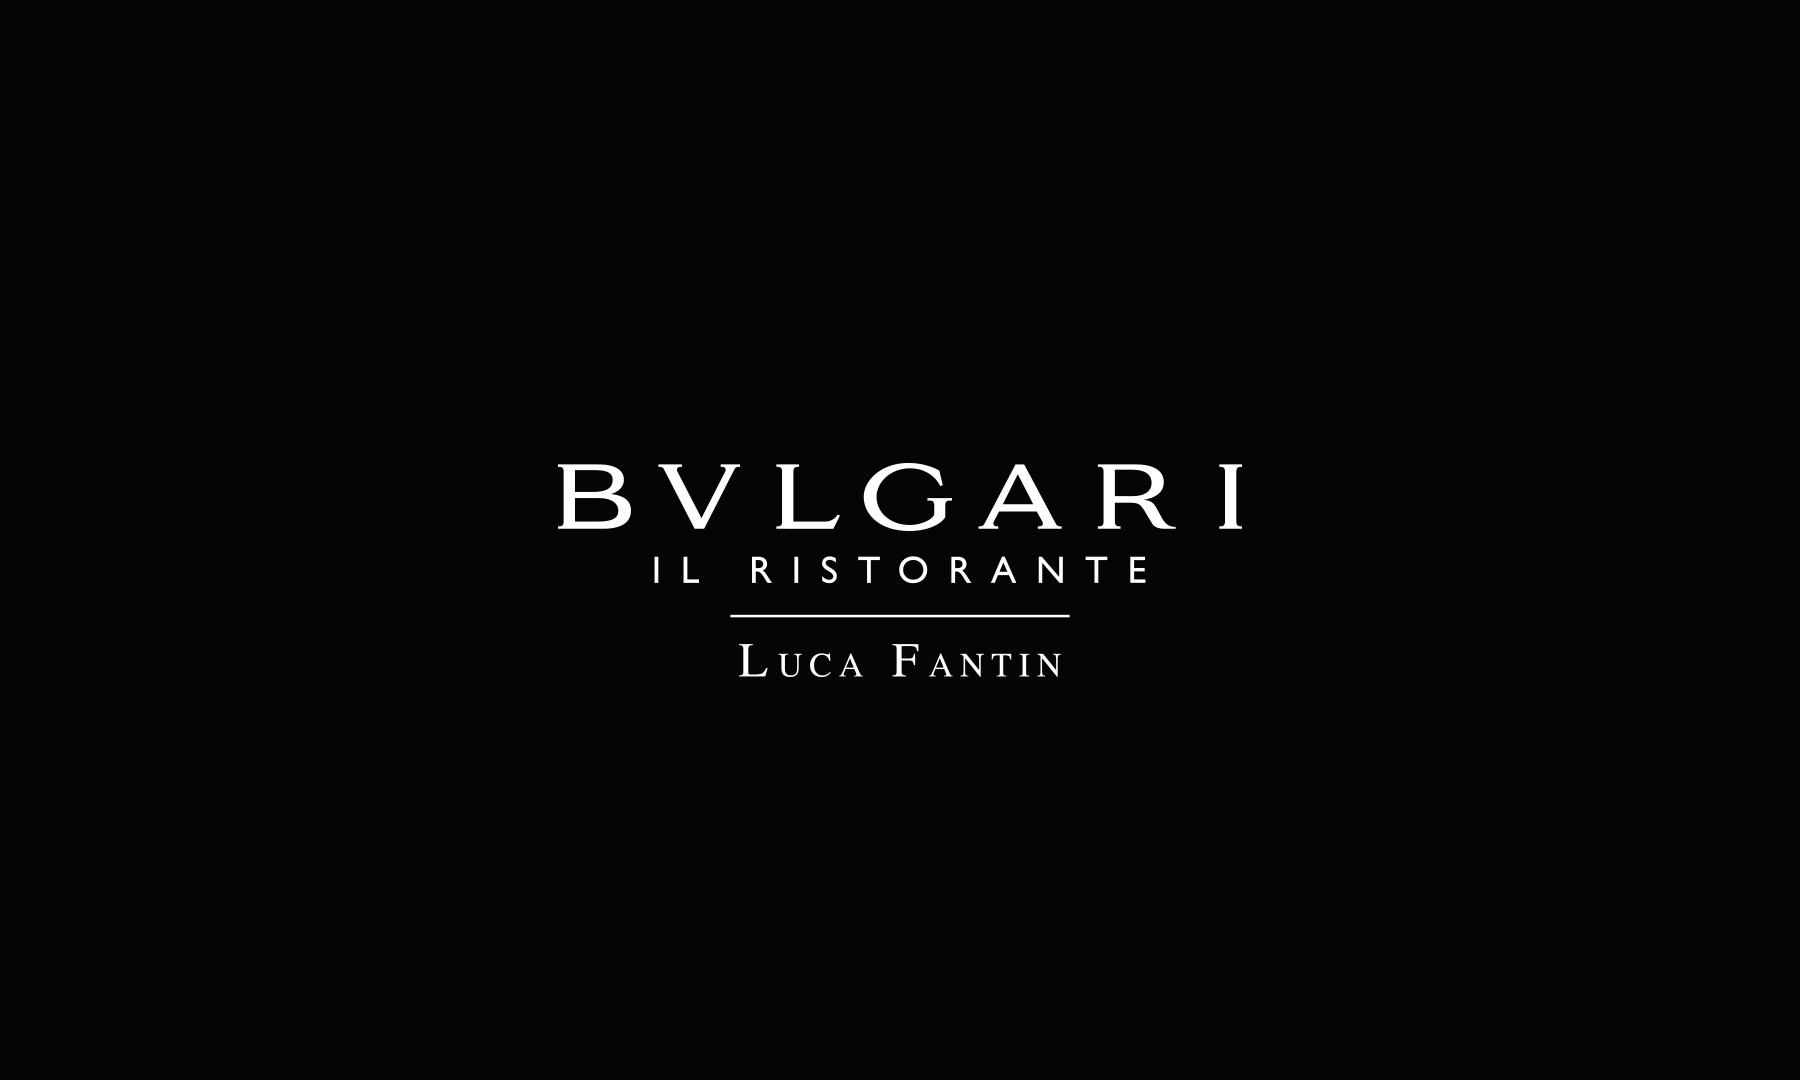 BVLGARI Il Ristorante Luca Fantin - New Product Event's images2